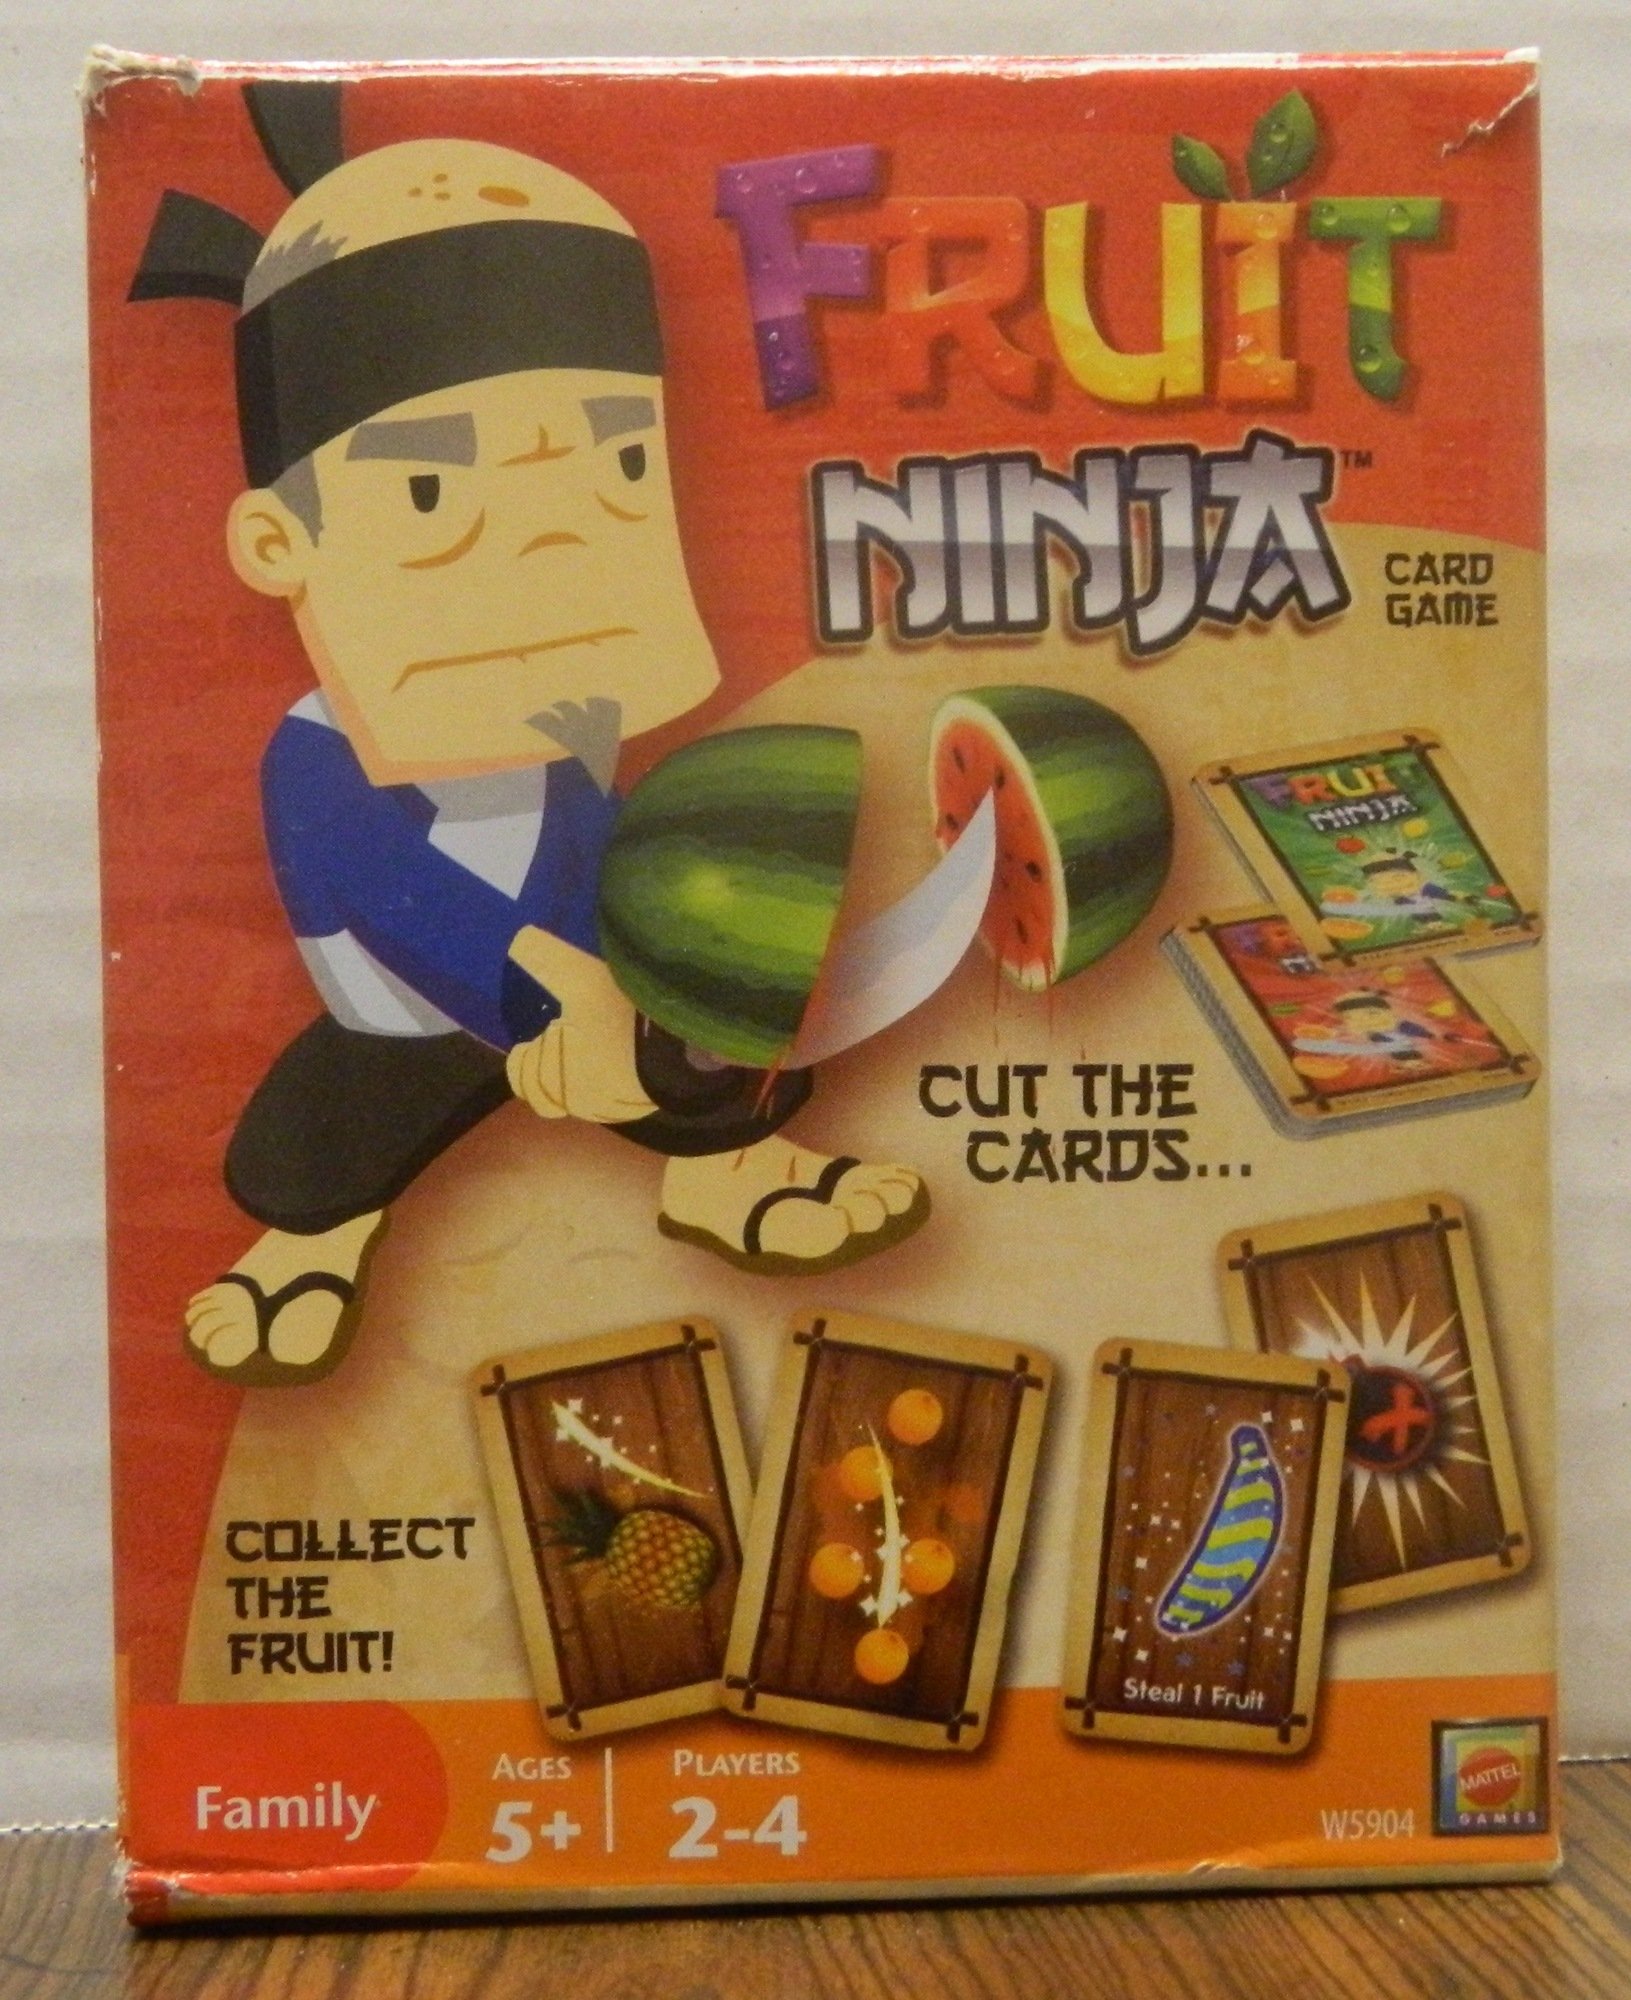 Fruit Ninja Card Game Review